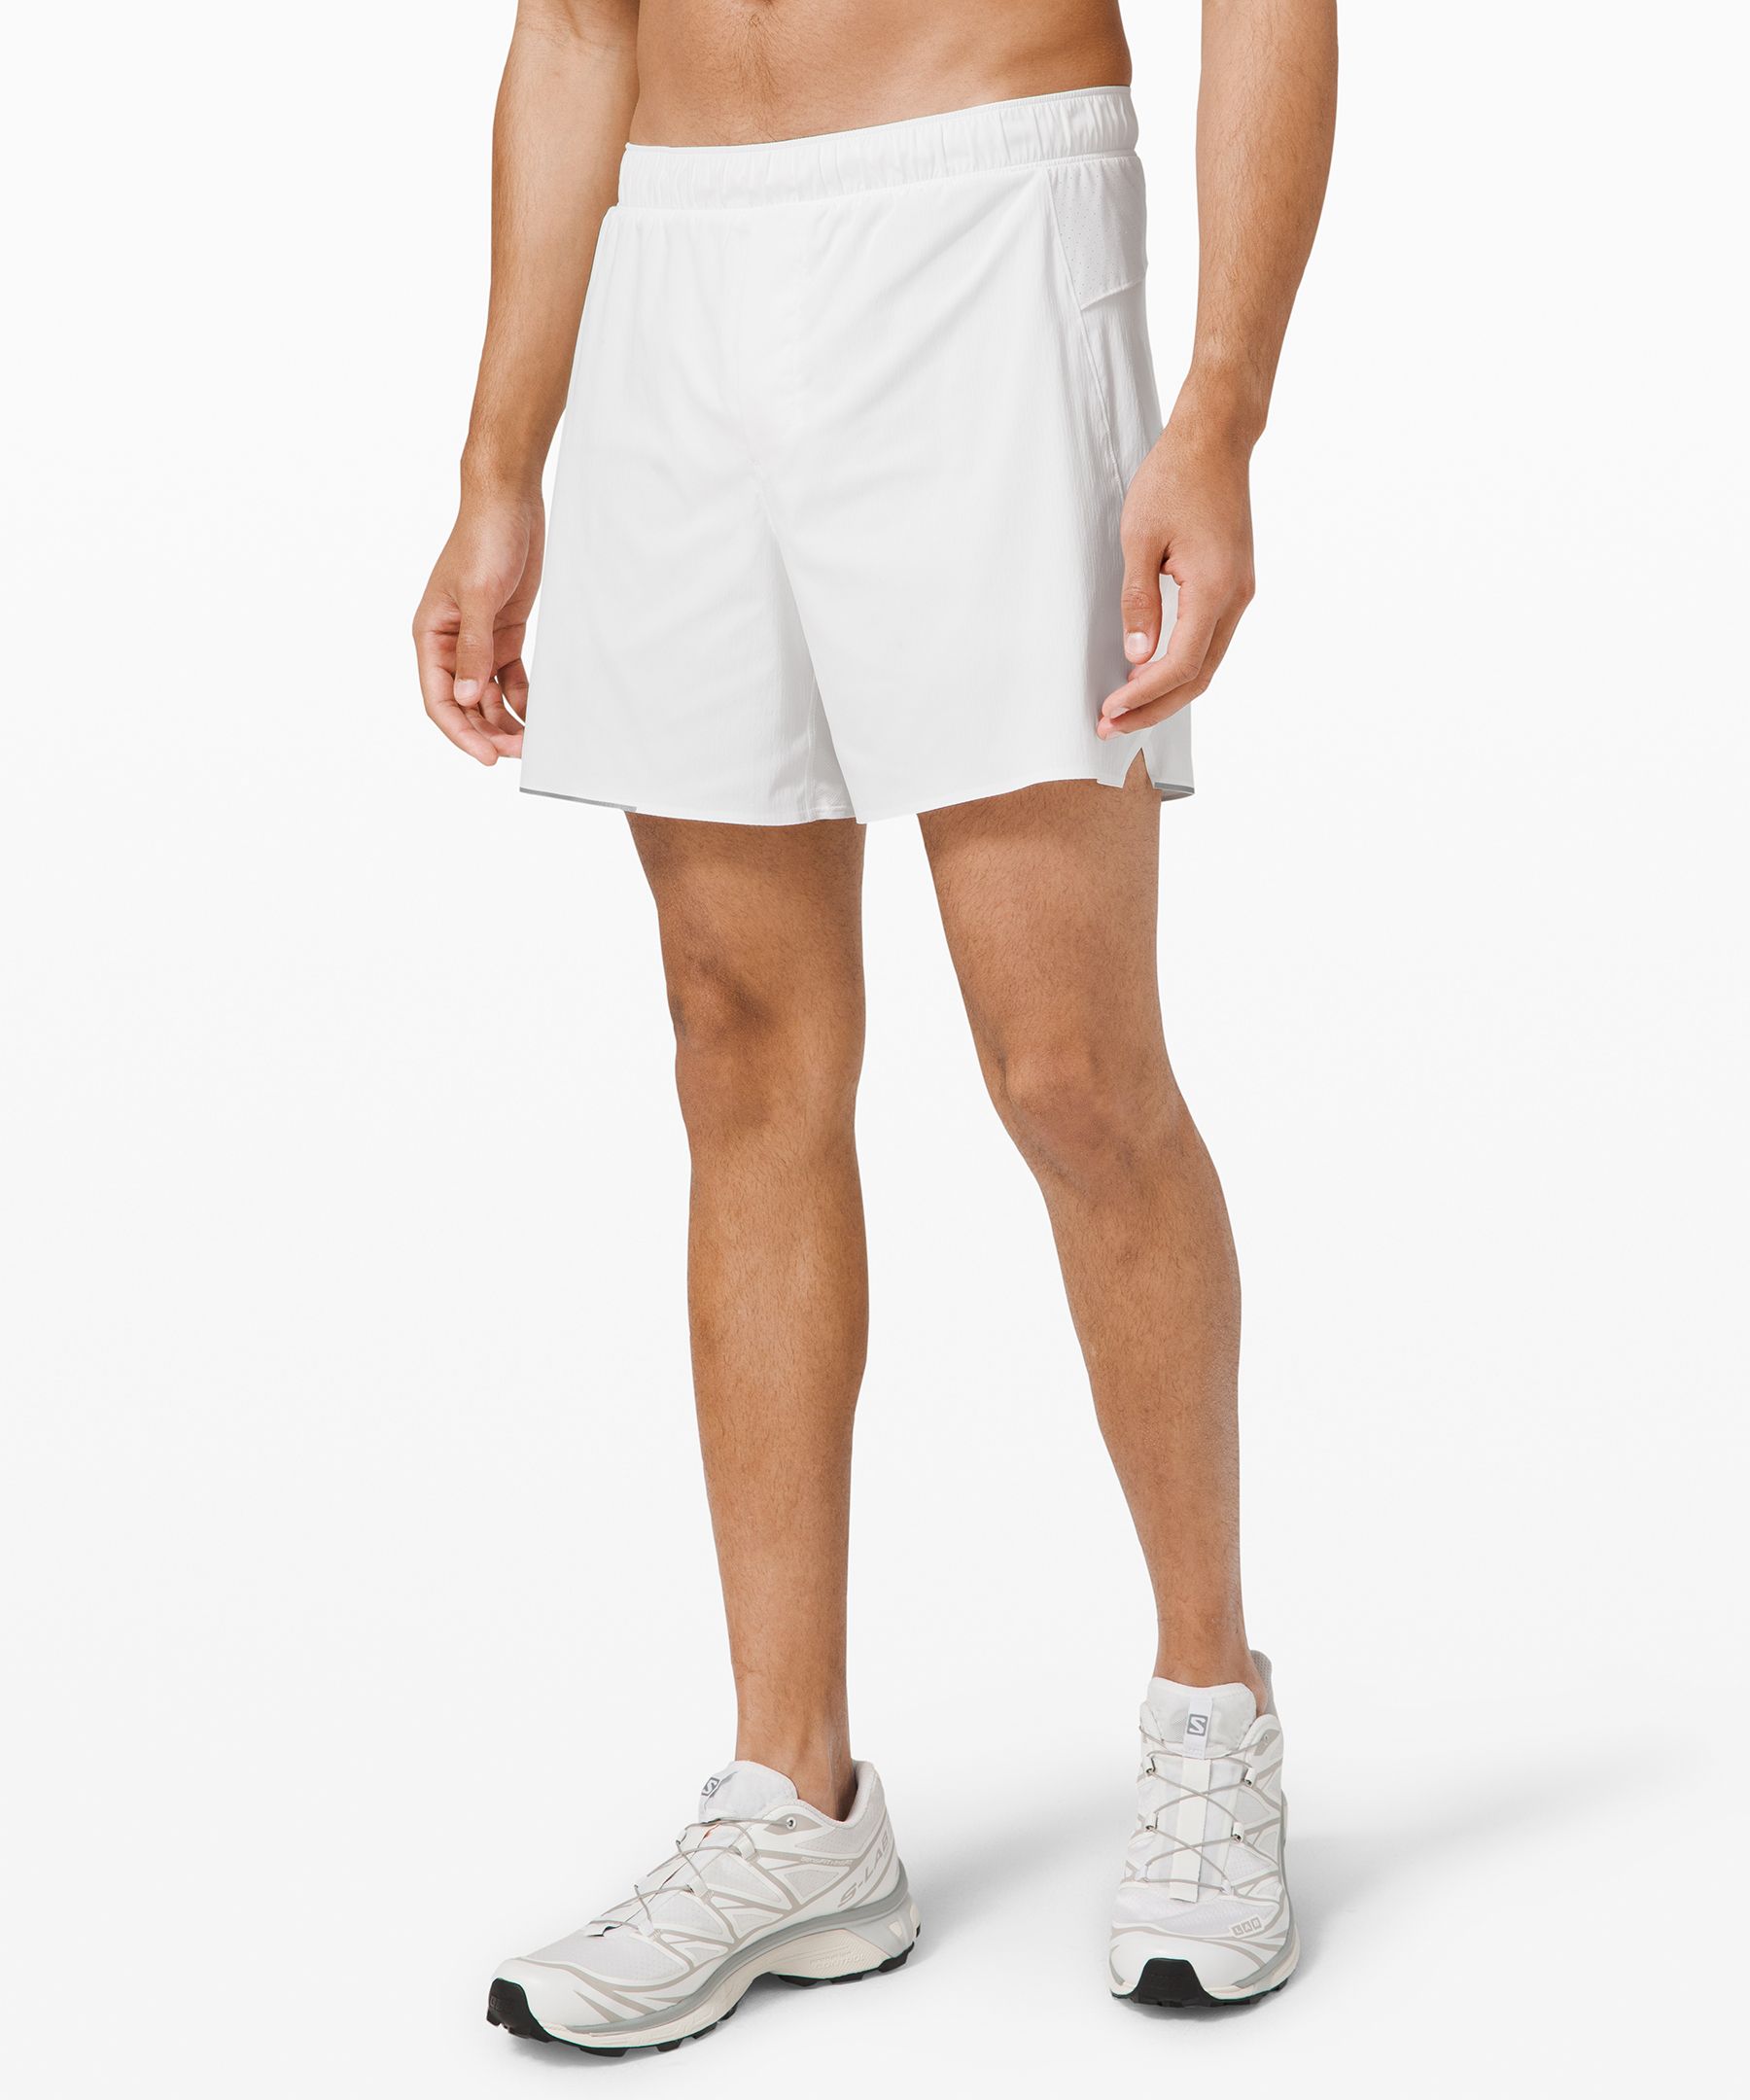 white lululemon shorts mens